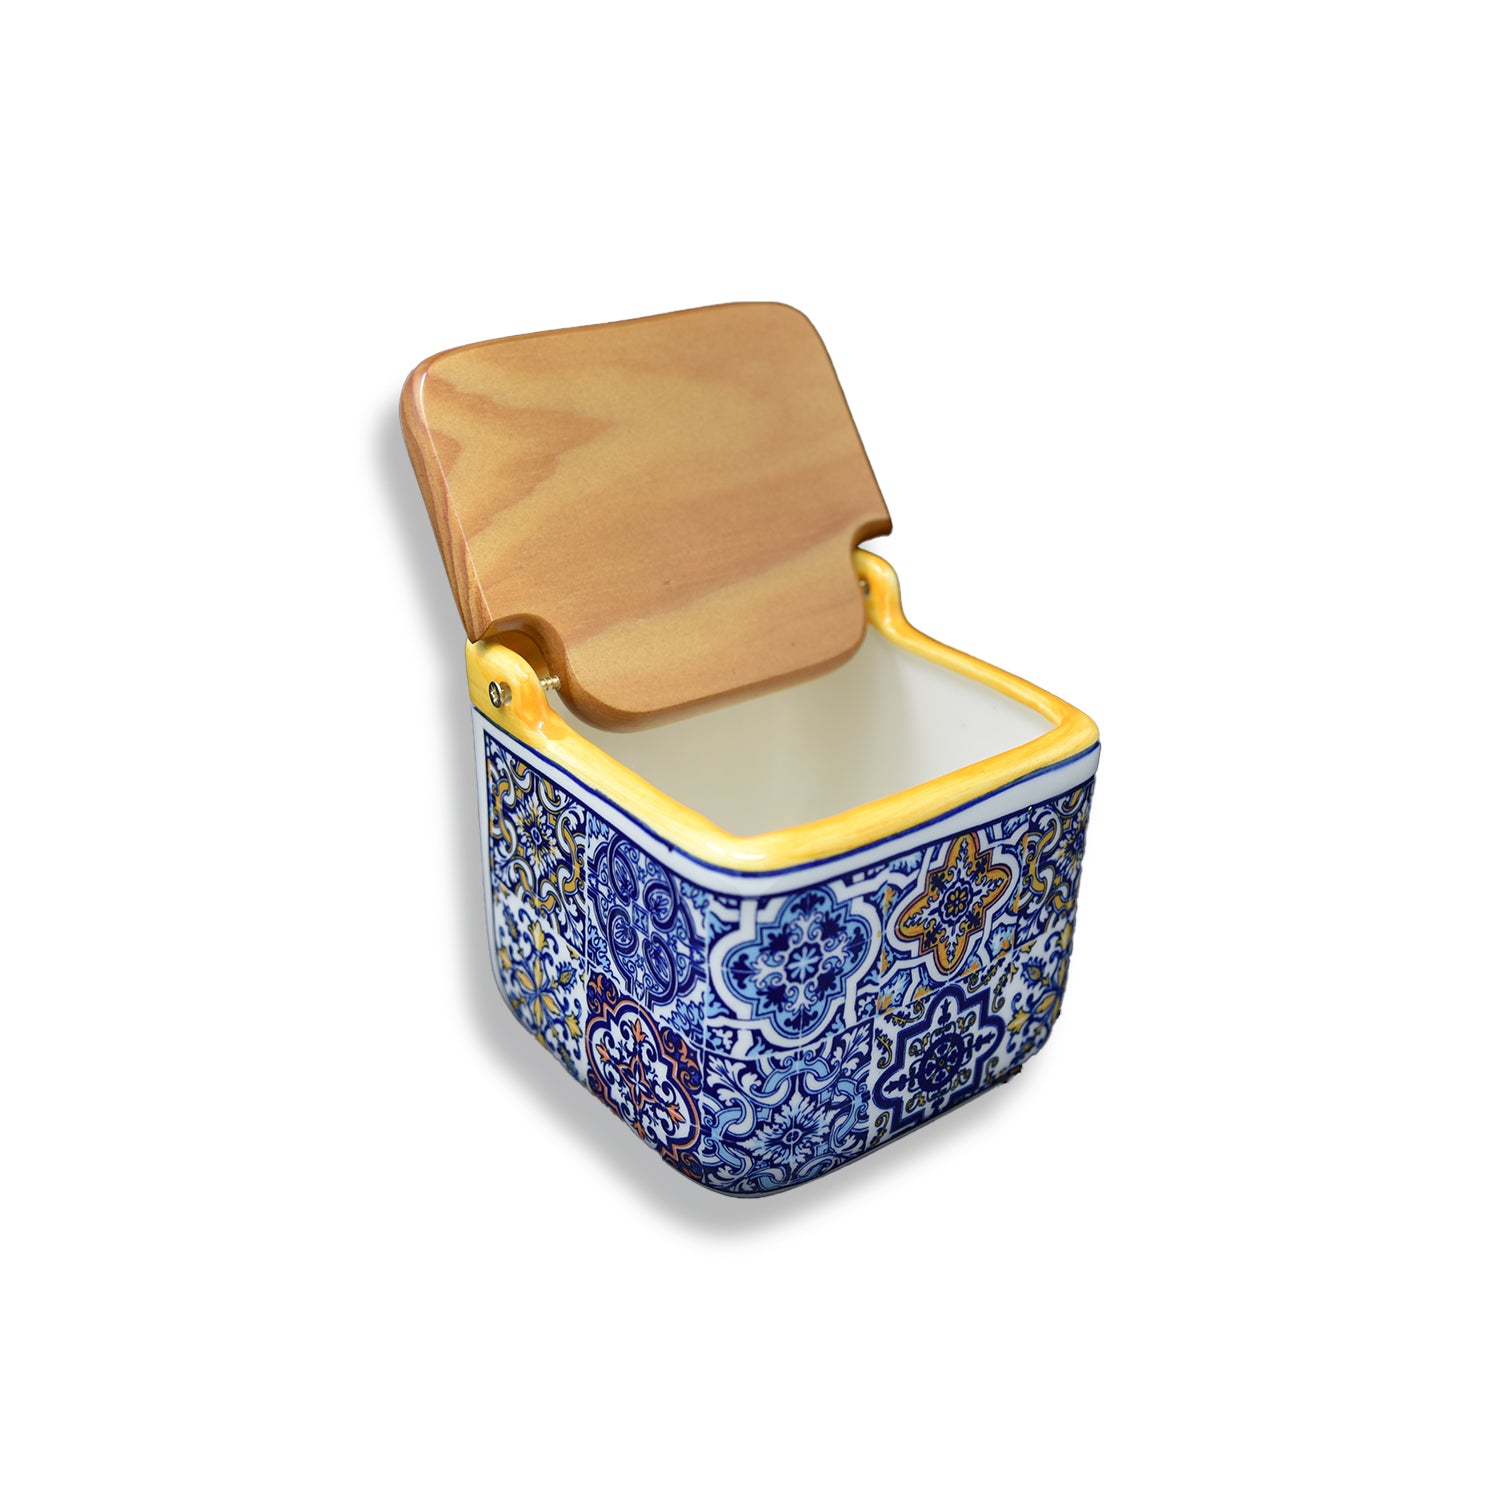 Azulejo Salt Box with Wood Lid 4.25in